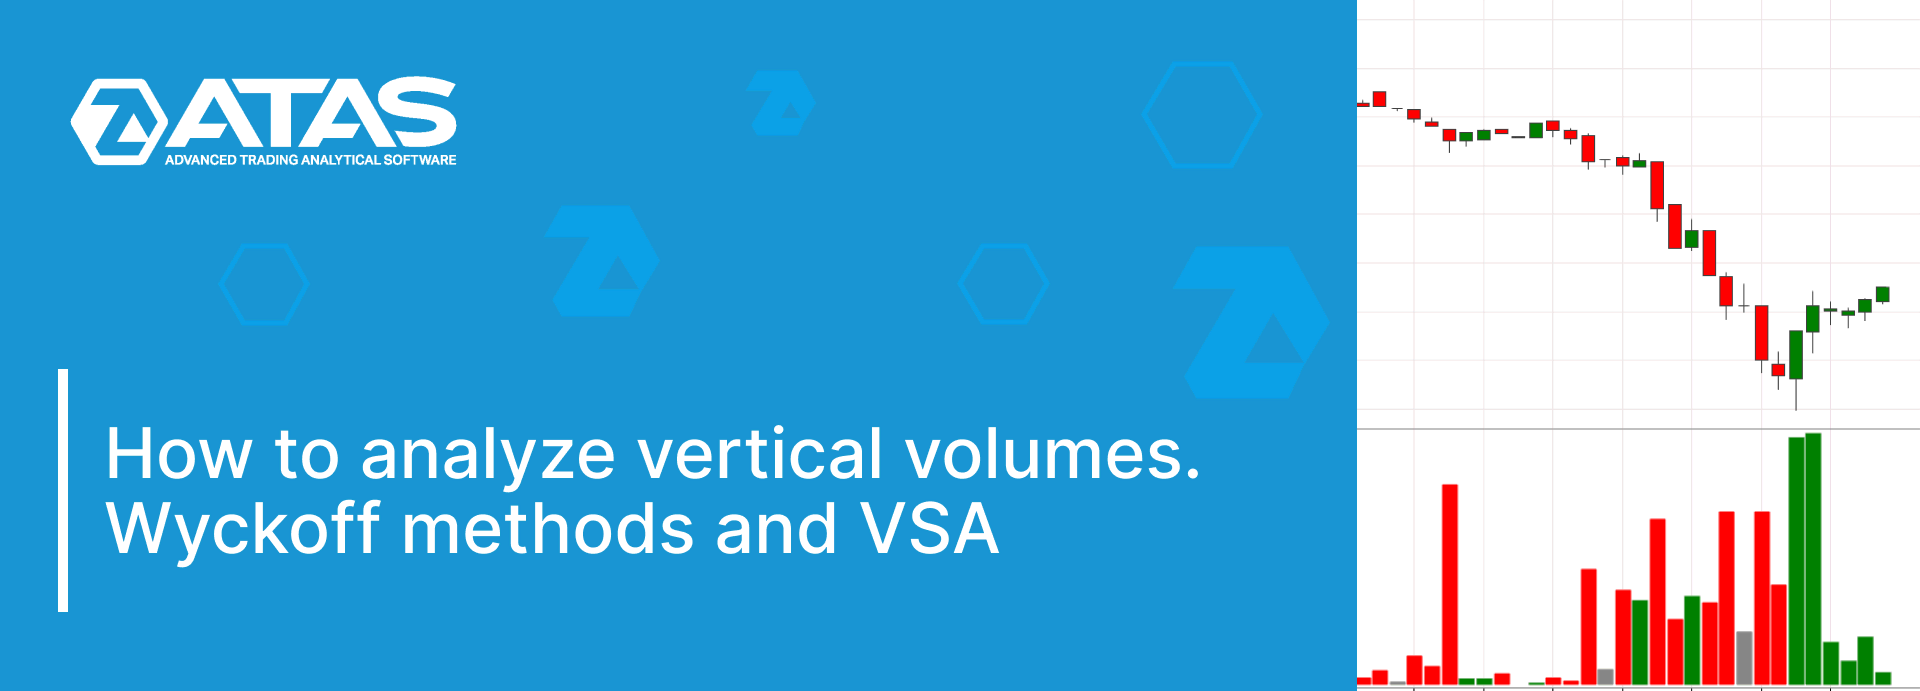 Vertical volume analysis. Wyckoff methods and VSA